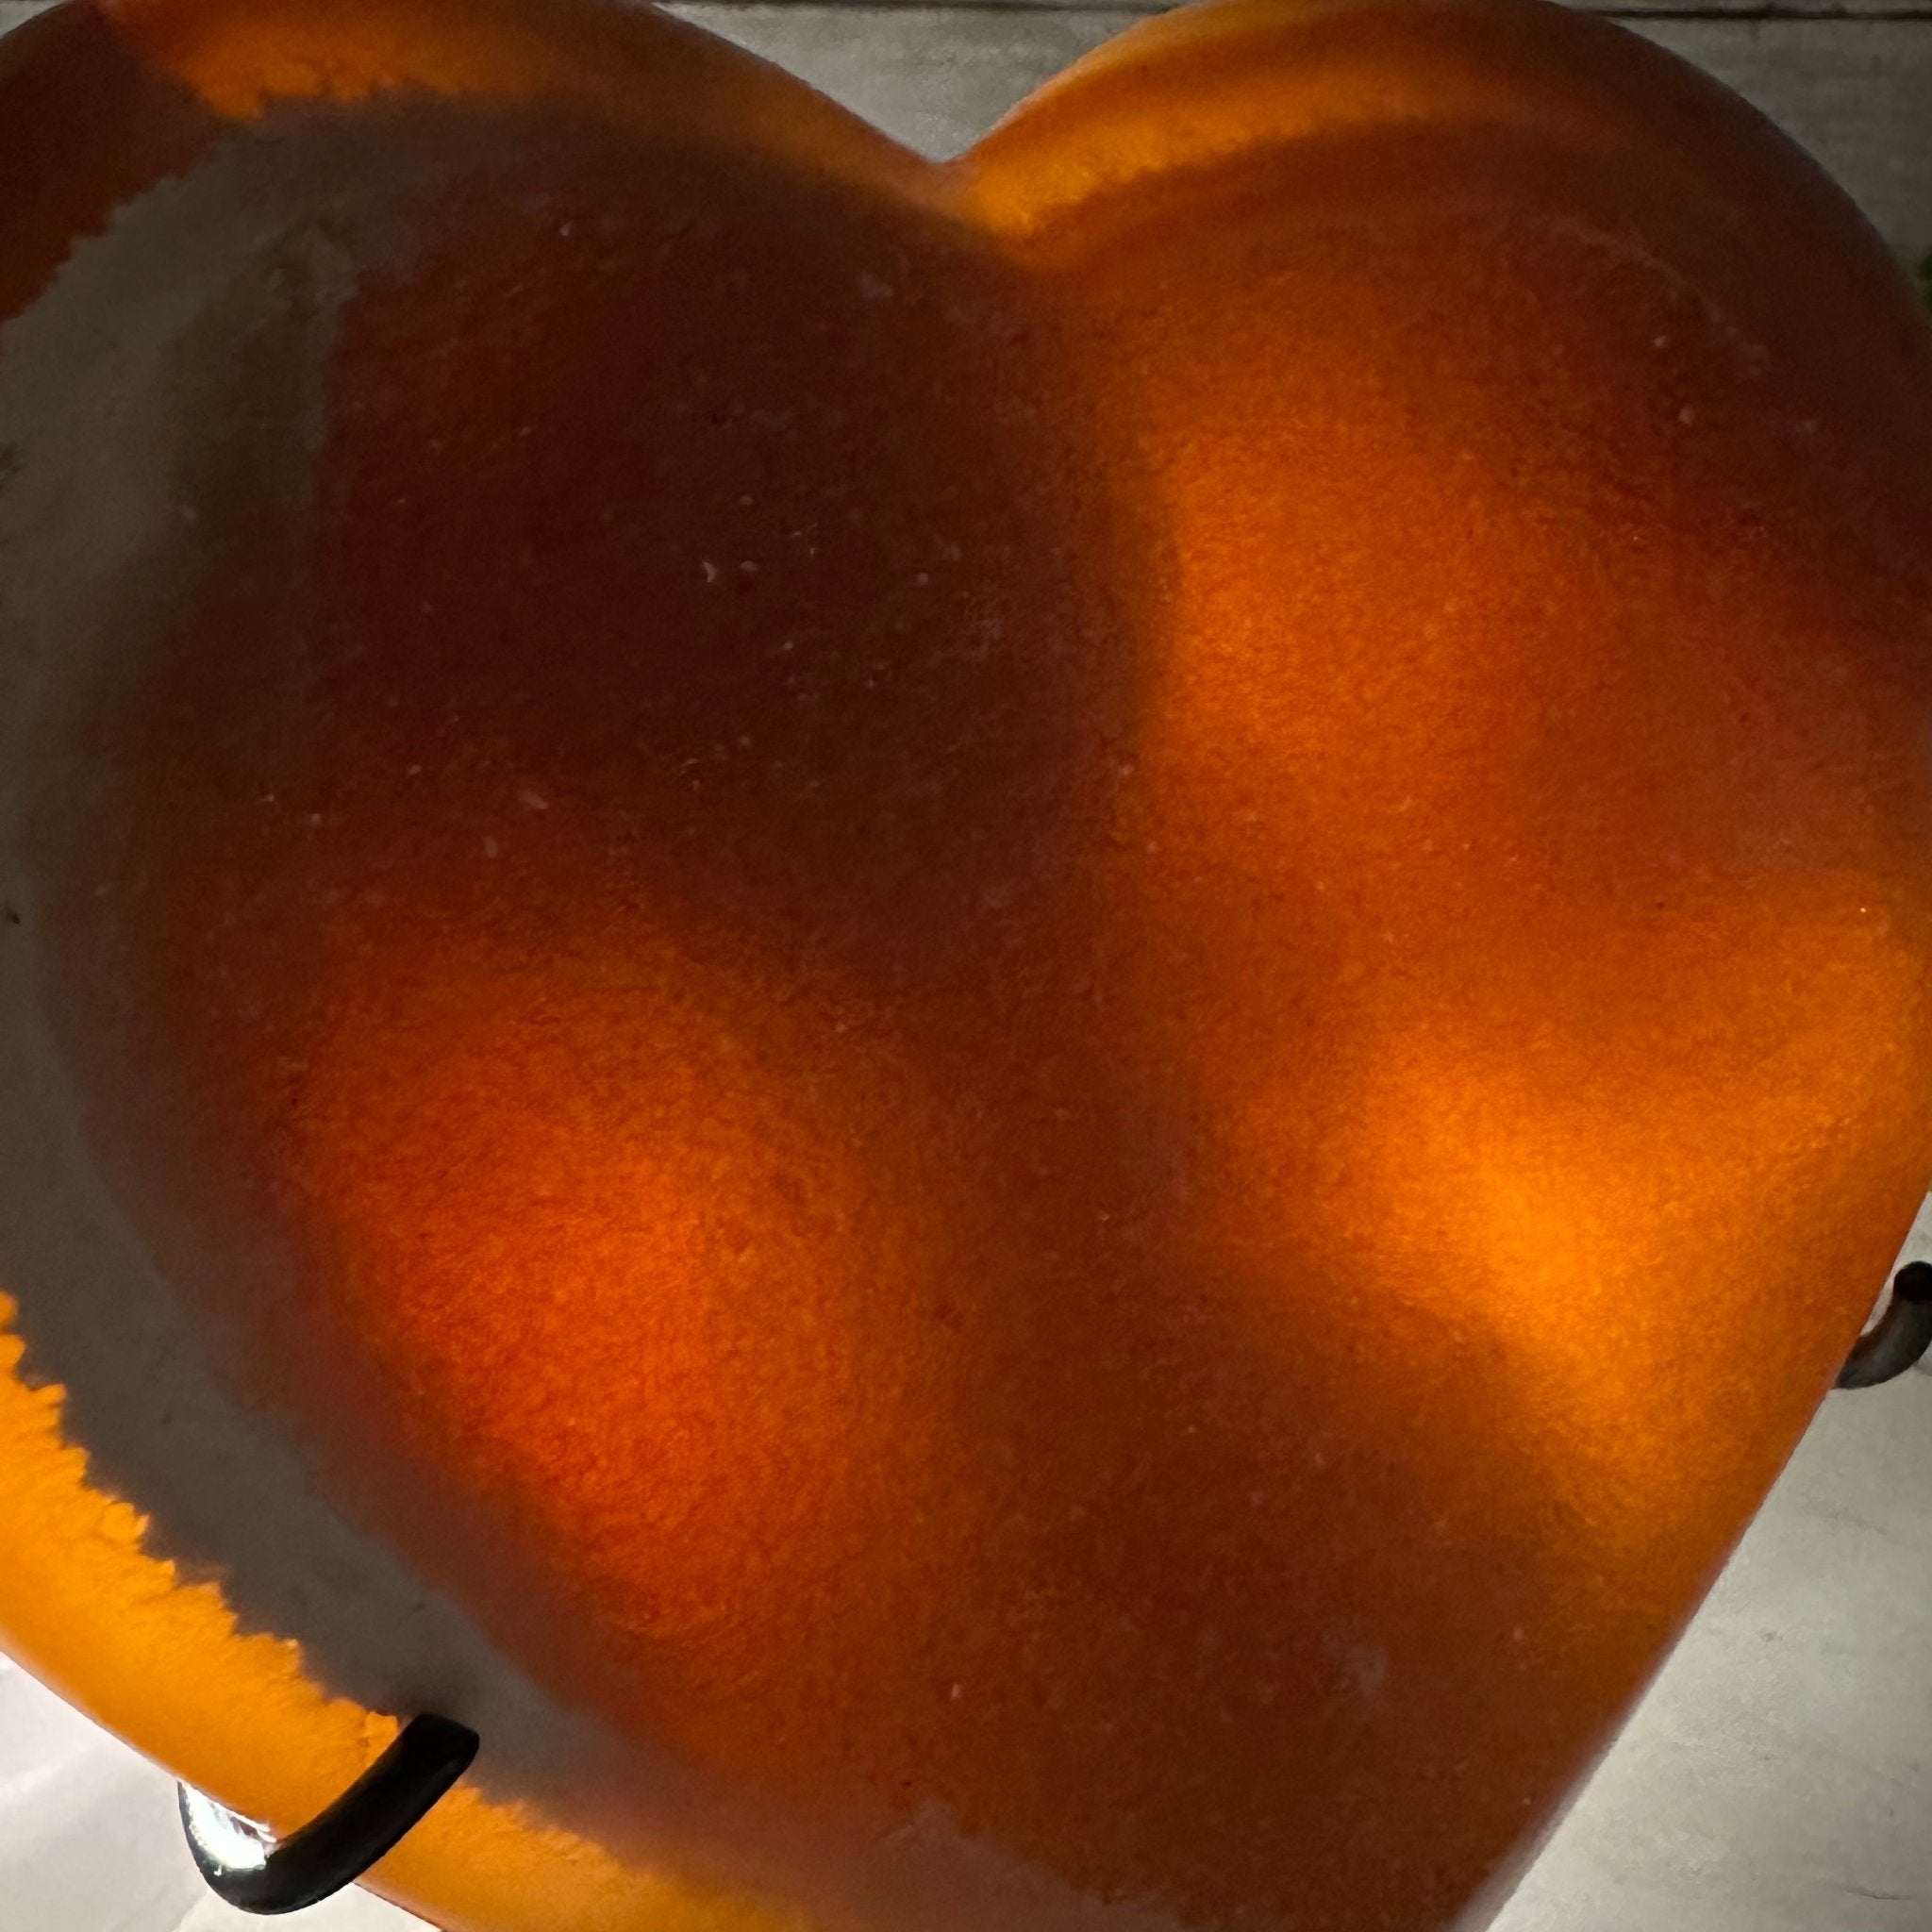 Polished Agate Heart Geode on a Metal Stand, 3.6 lbs & 6.5" Tall, Model #5468-0068 by Brazil Gems - Brazil GemsBrazil GemsPolished Agate Heart Geode on a Metal Stand, 3.6 lbs & 6.5" Tall, Model #5468-0068 by Brazil GemsHearts5468-0068